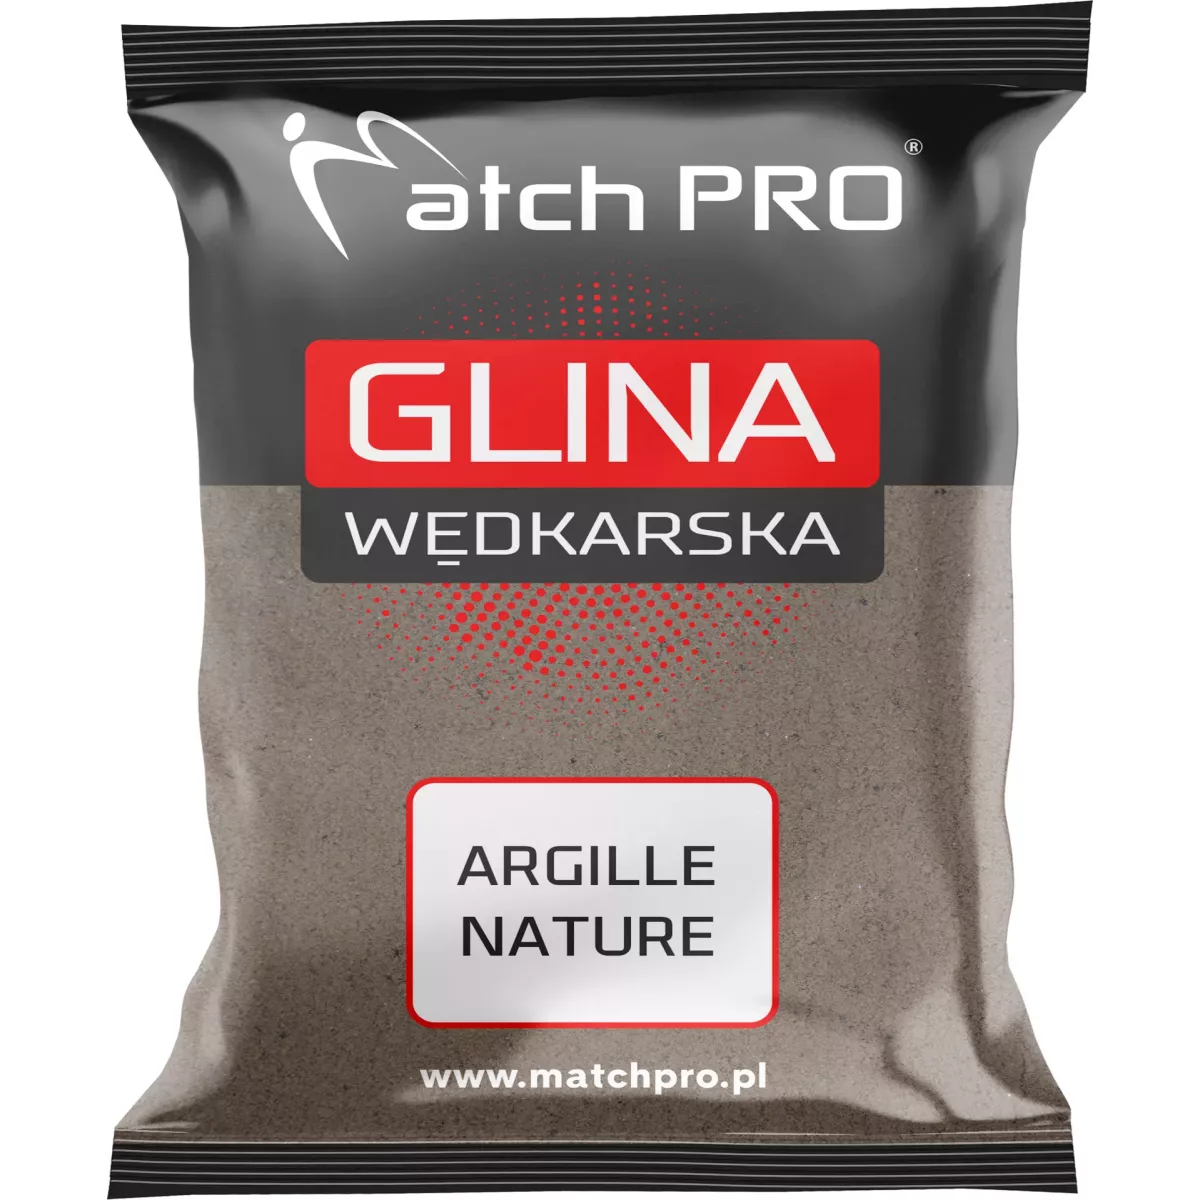 Glina MatchPro 2kg - ARGILLE NATURE Jasna